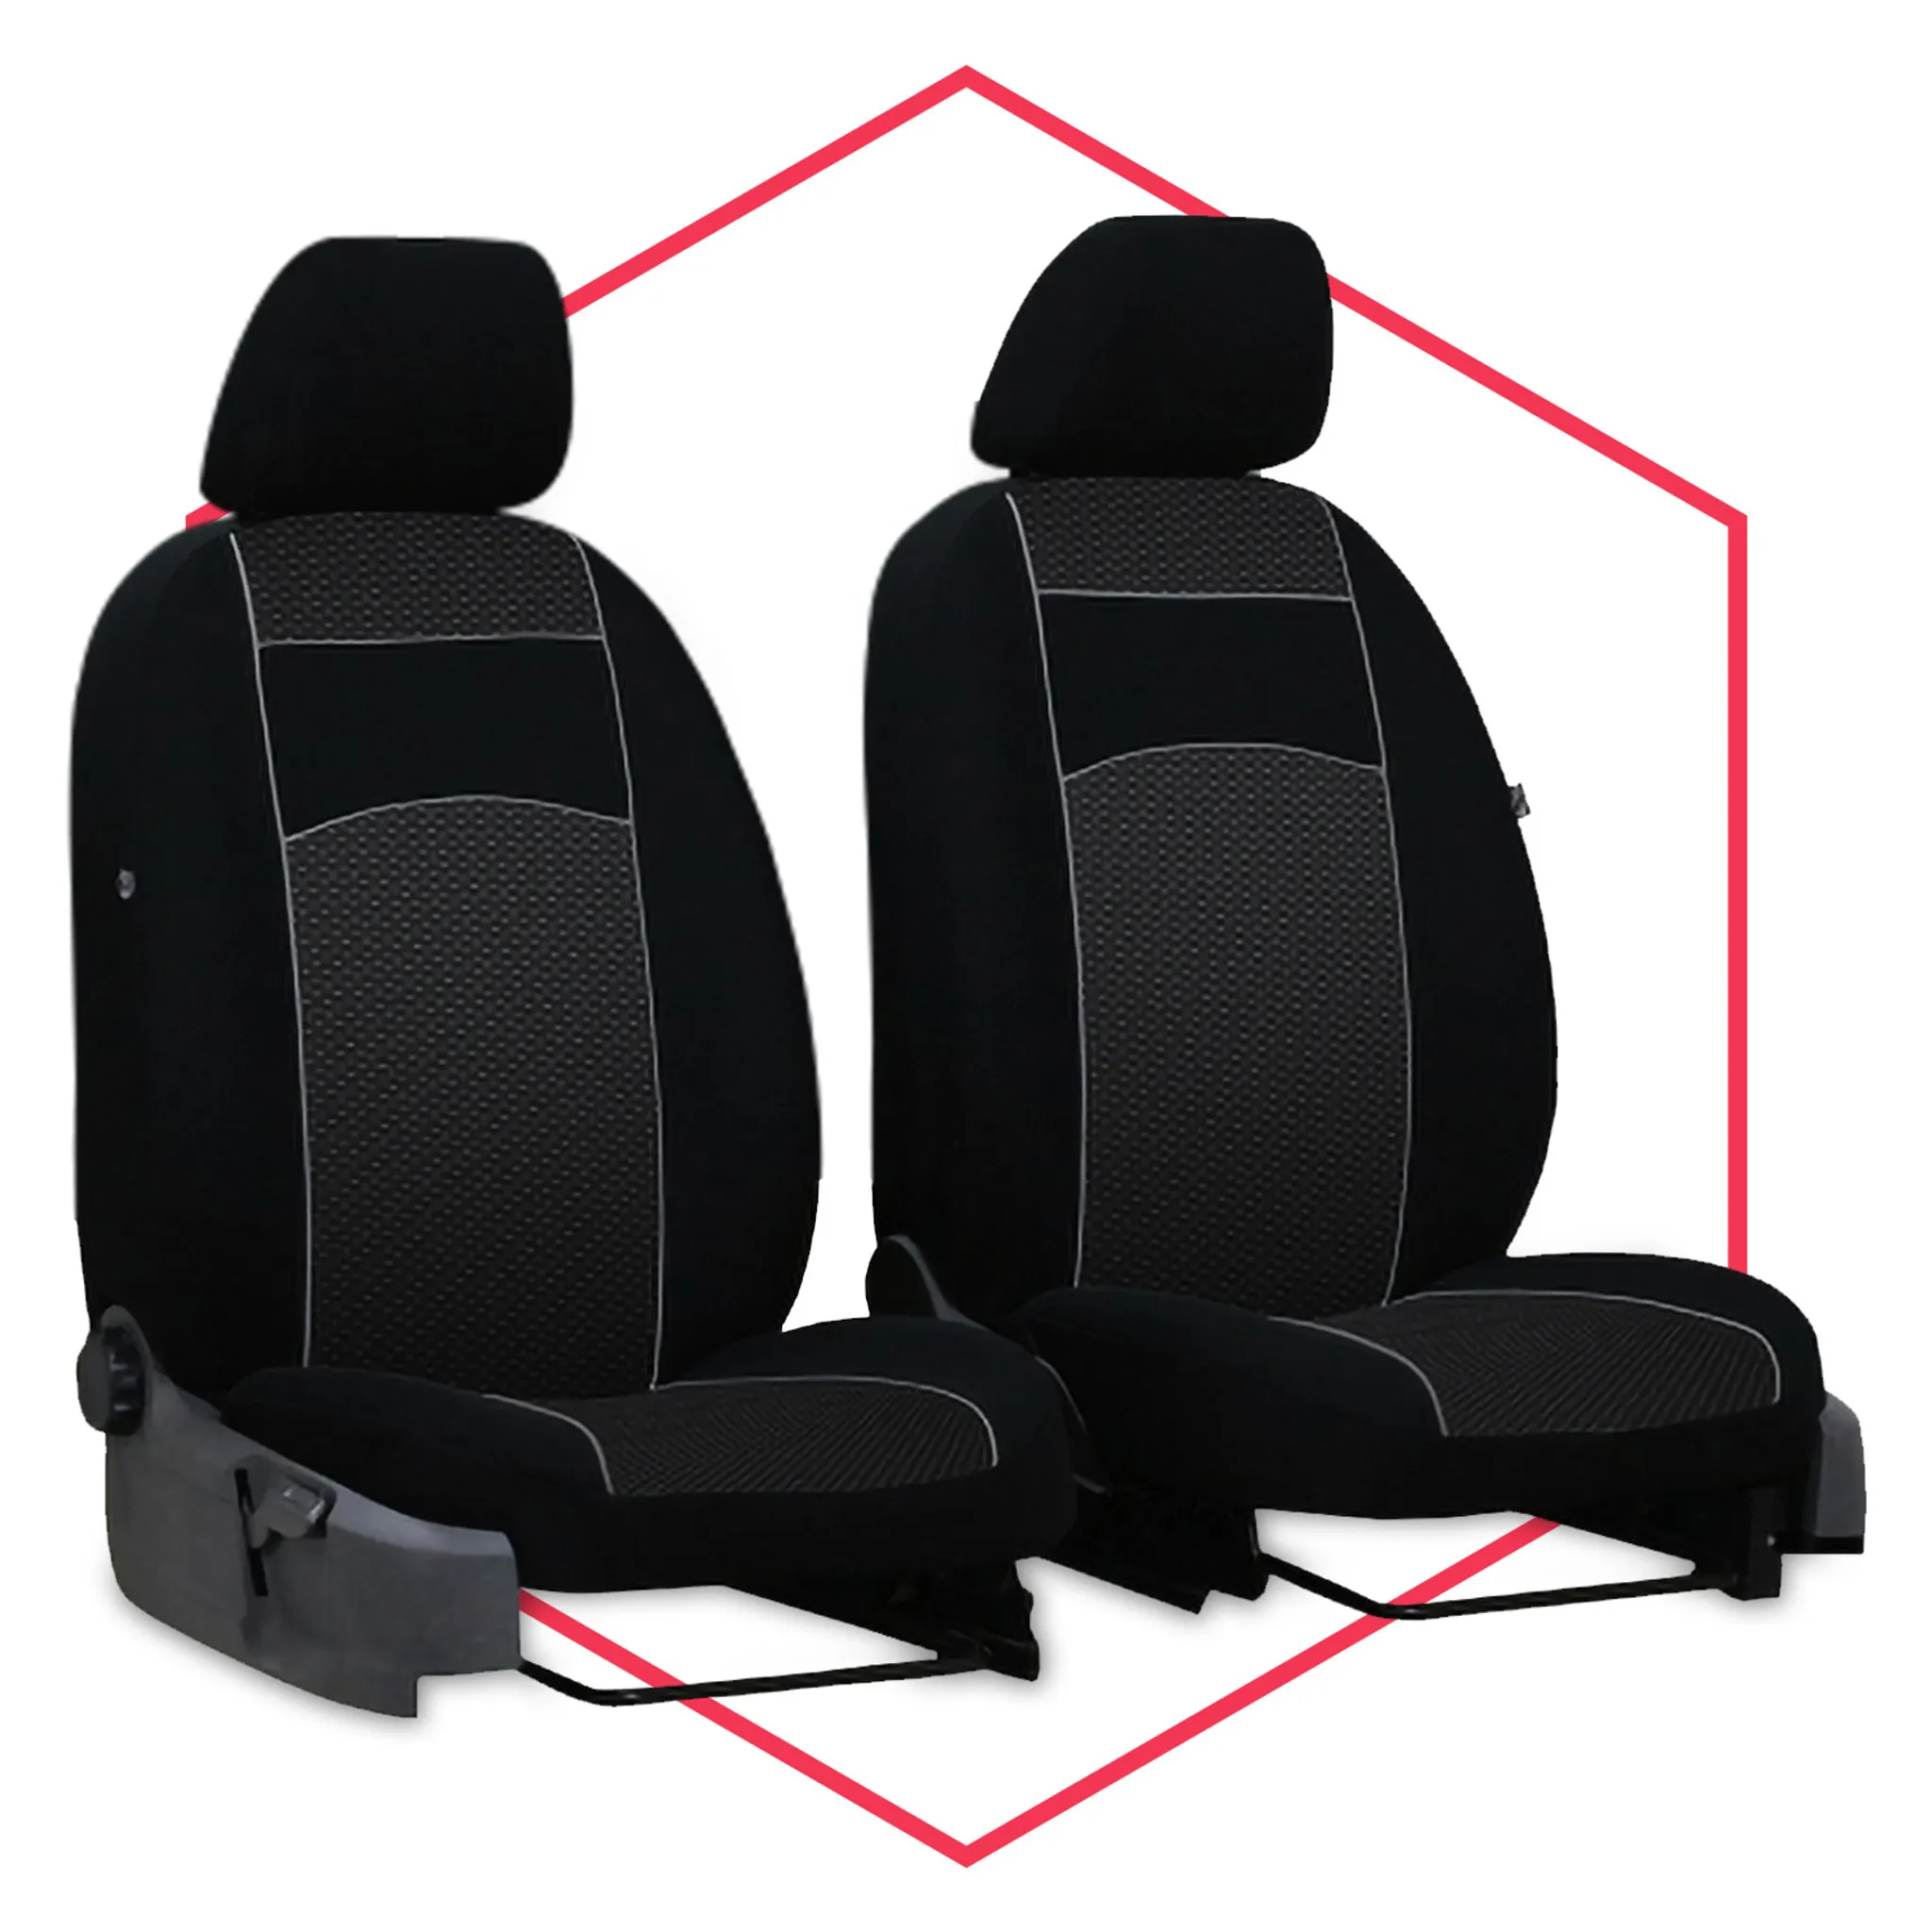 Universal 5-Sitze Autositzbezug Deluxe